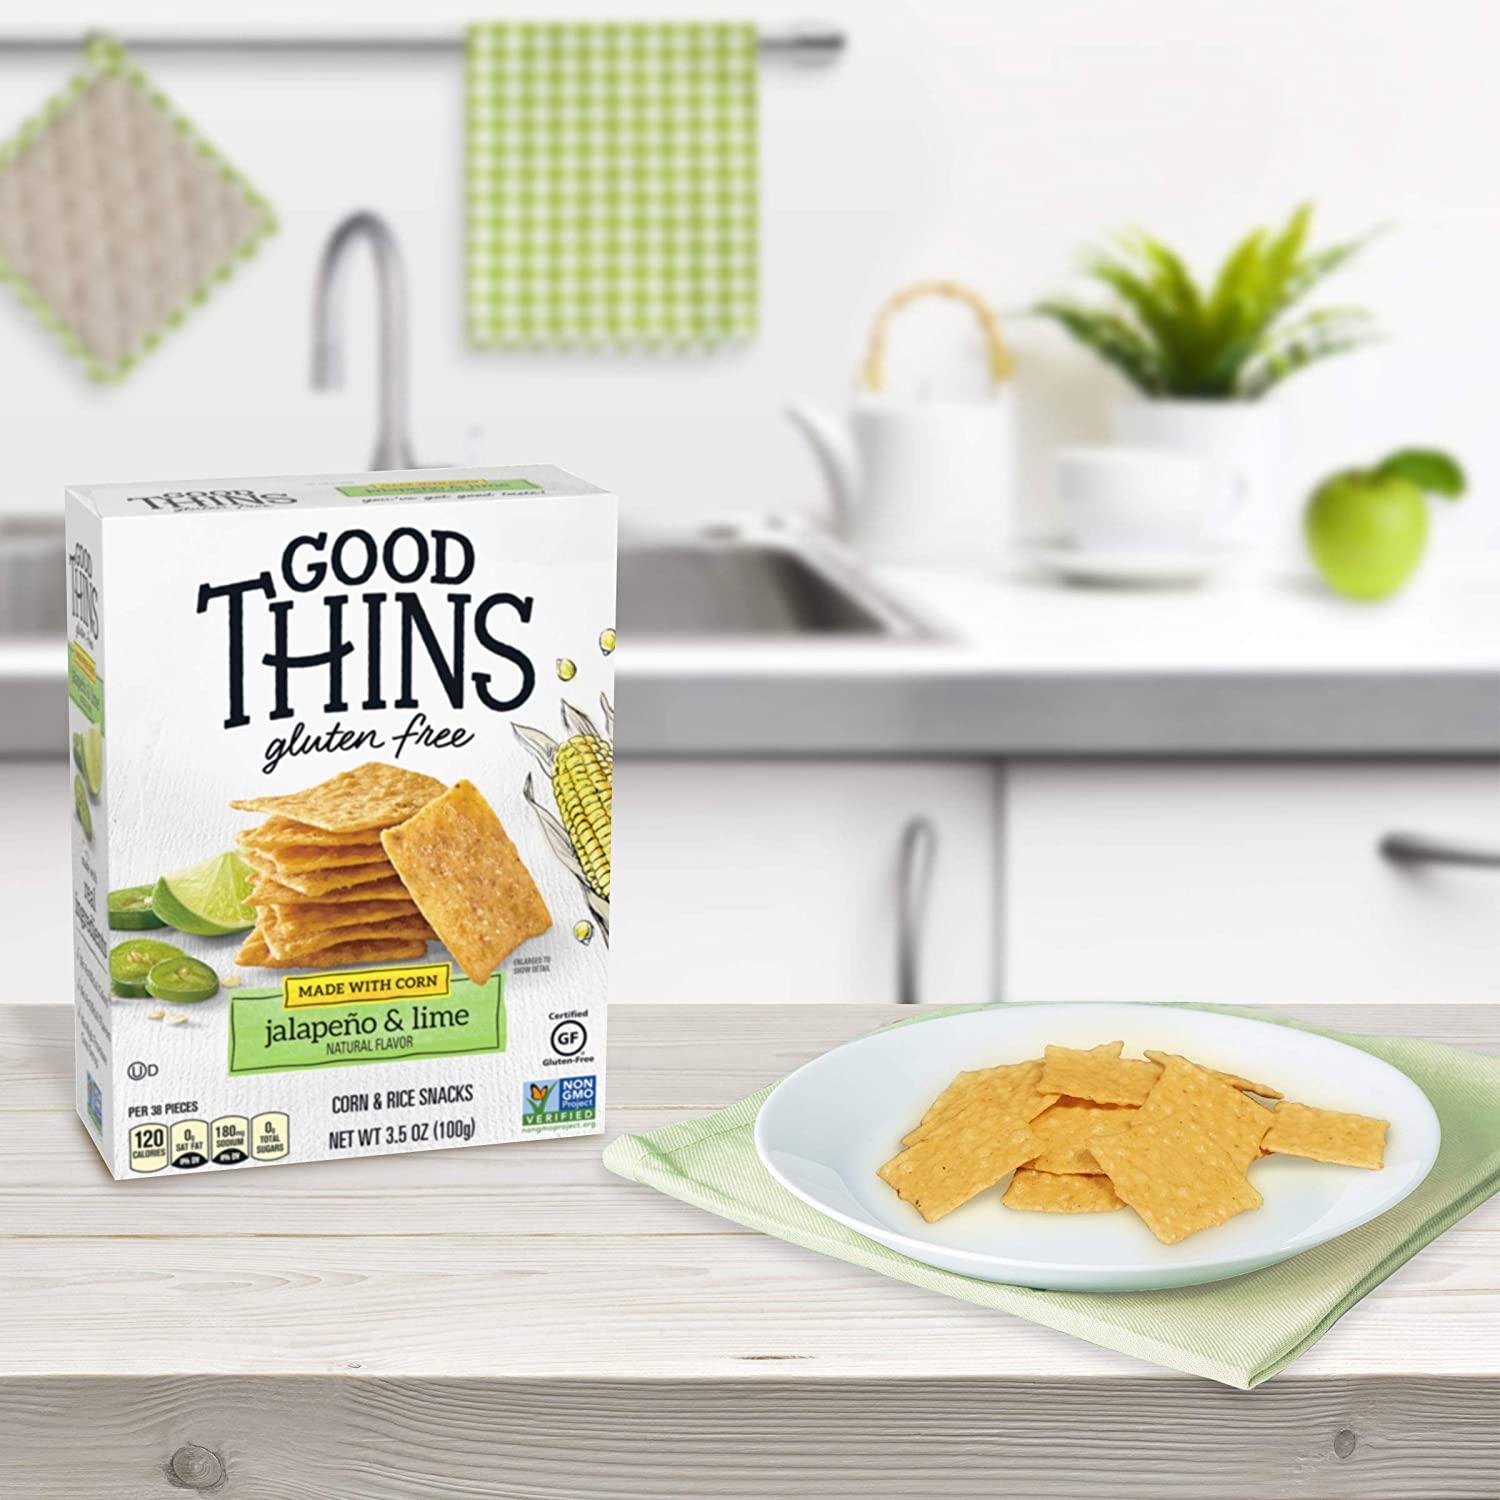 Good Thins Corn & Rice Snacks, Gluten Free, Jalapeno & Lime - 3.5 oz